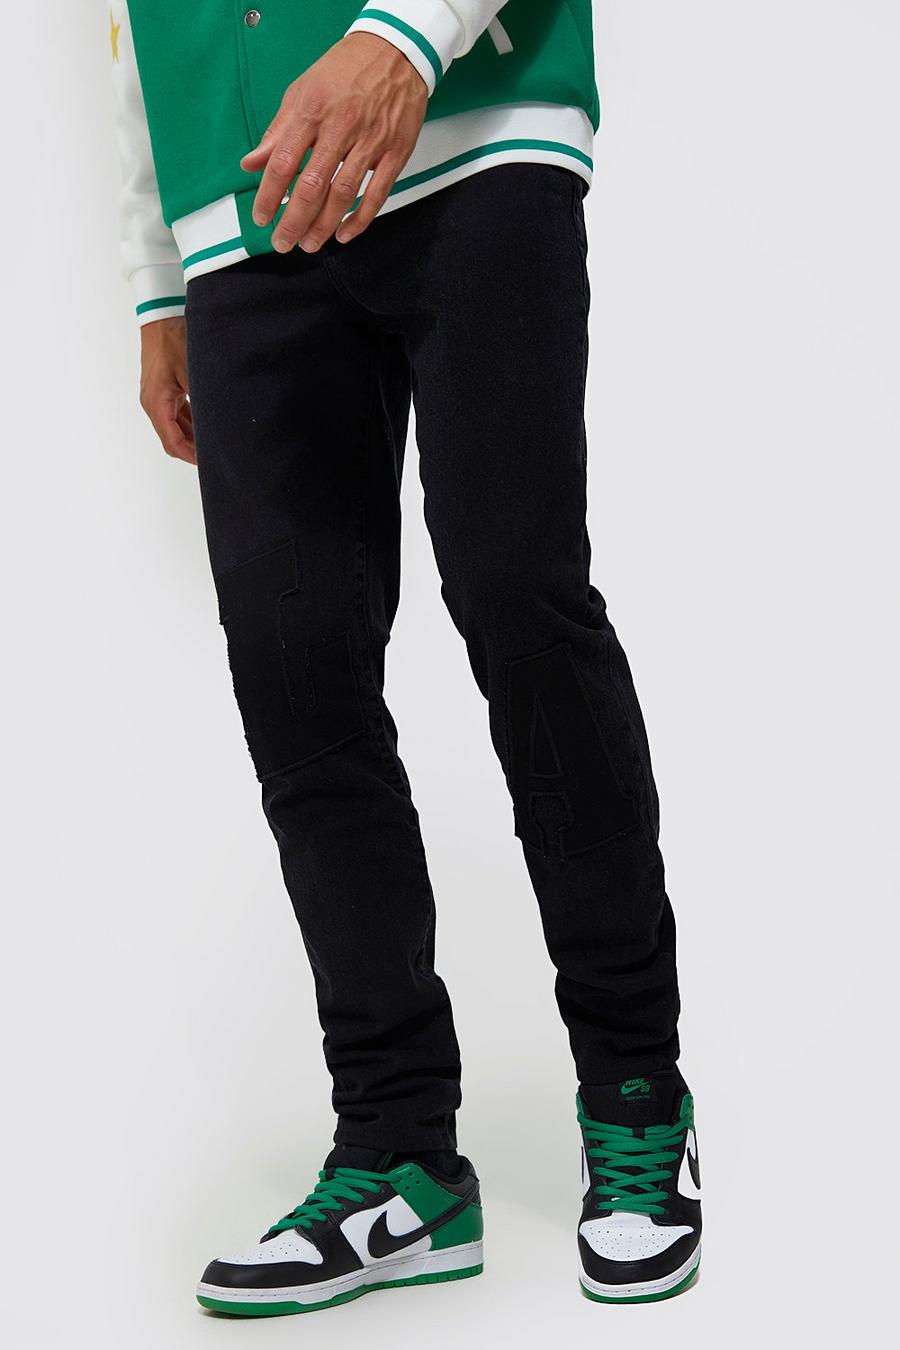 Washed black ג'ינס מבד קשיח בגזרה צרה עם אפליקציית LA בסגנון נבחרת ספורט, לגברים גבוהים